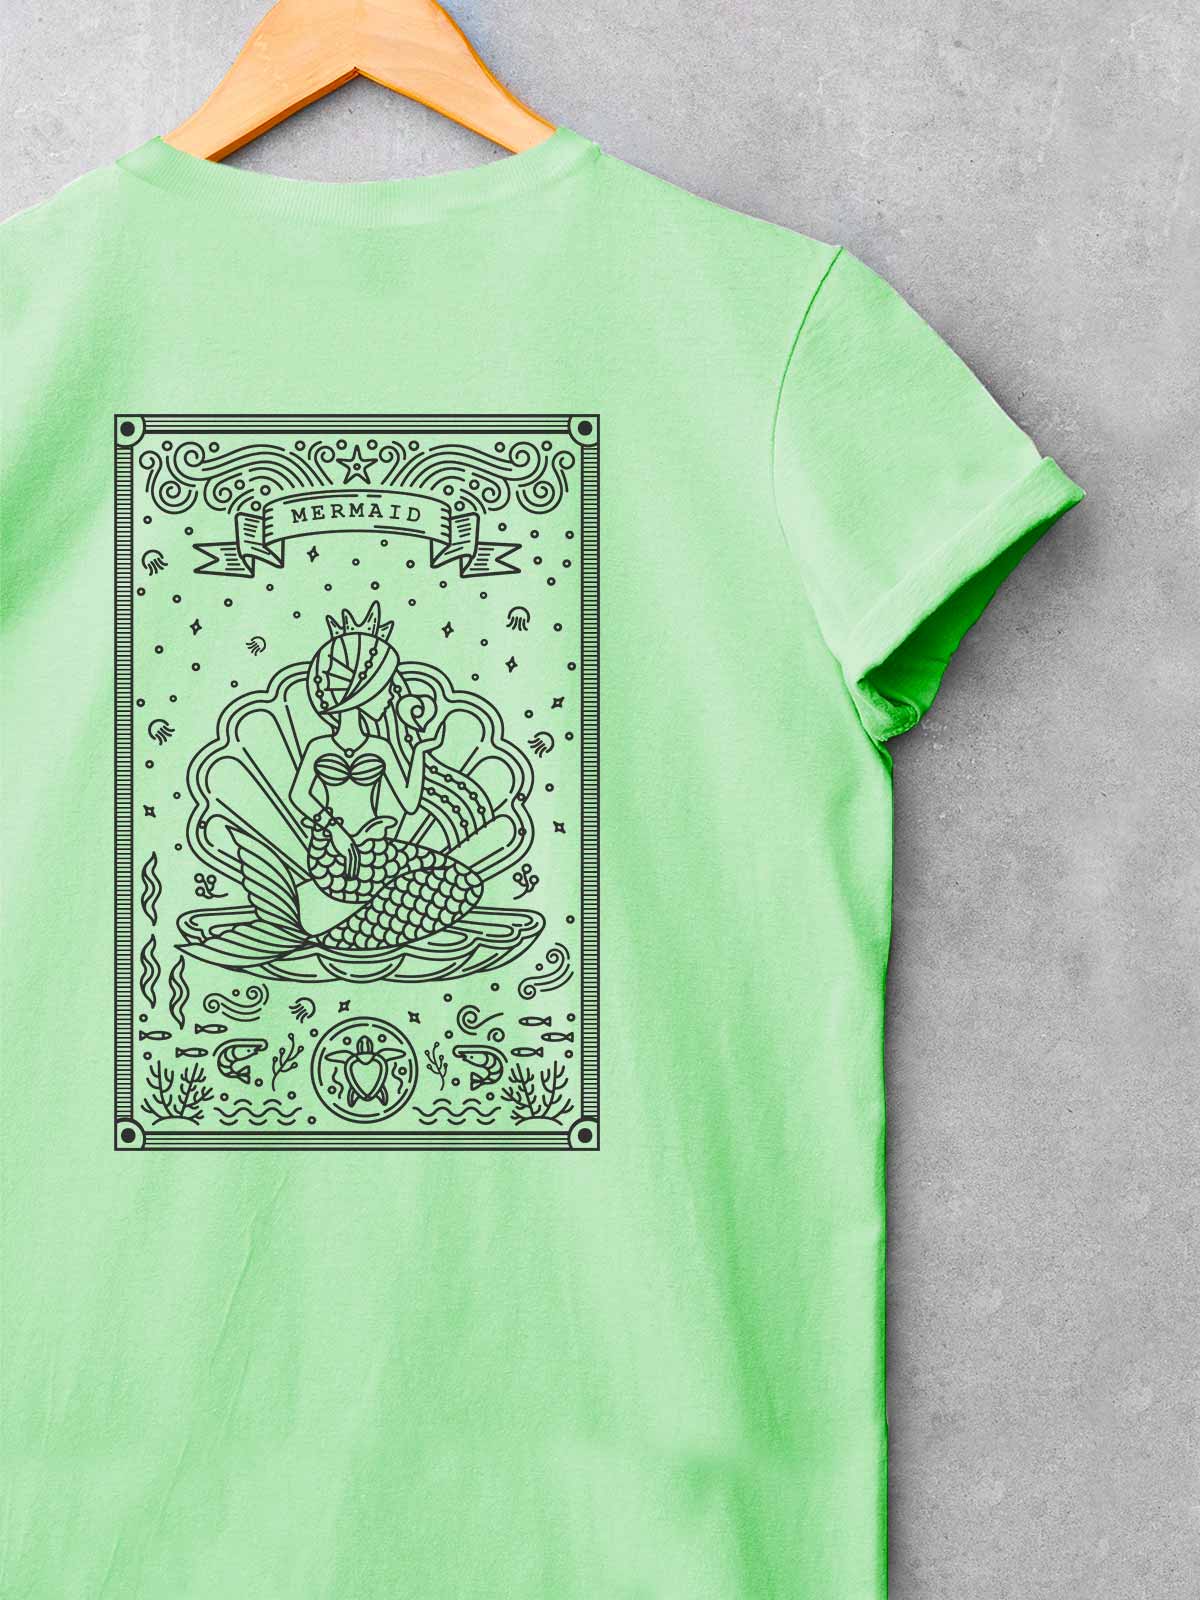 Mermaid-backprint-t-shirt-for-men by Ghumakkad